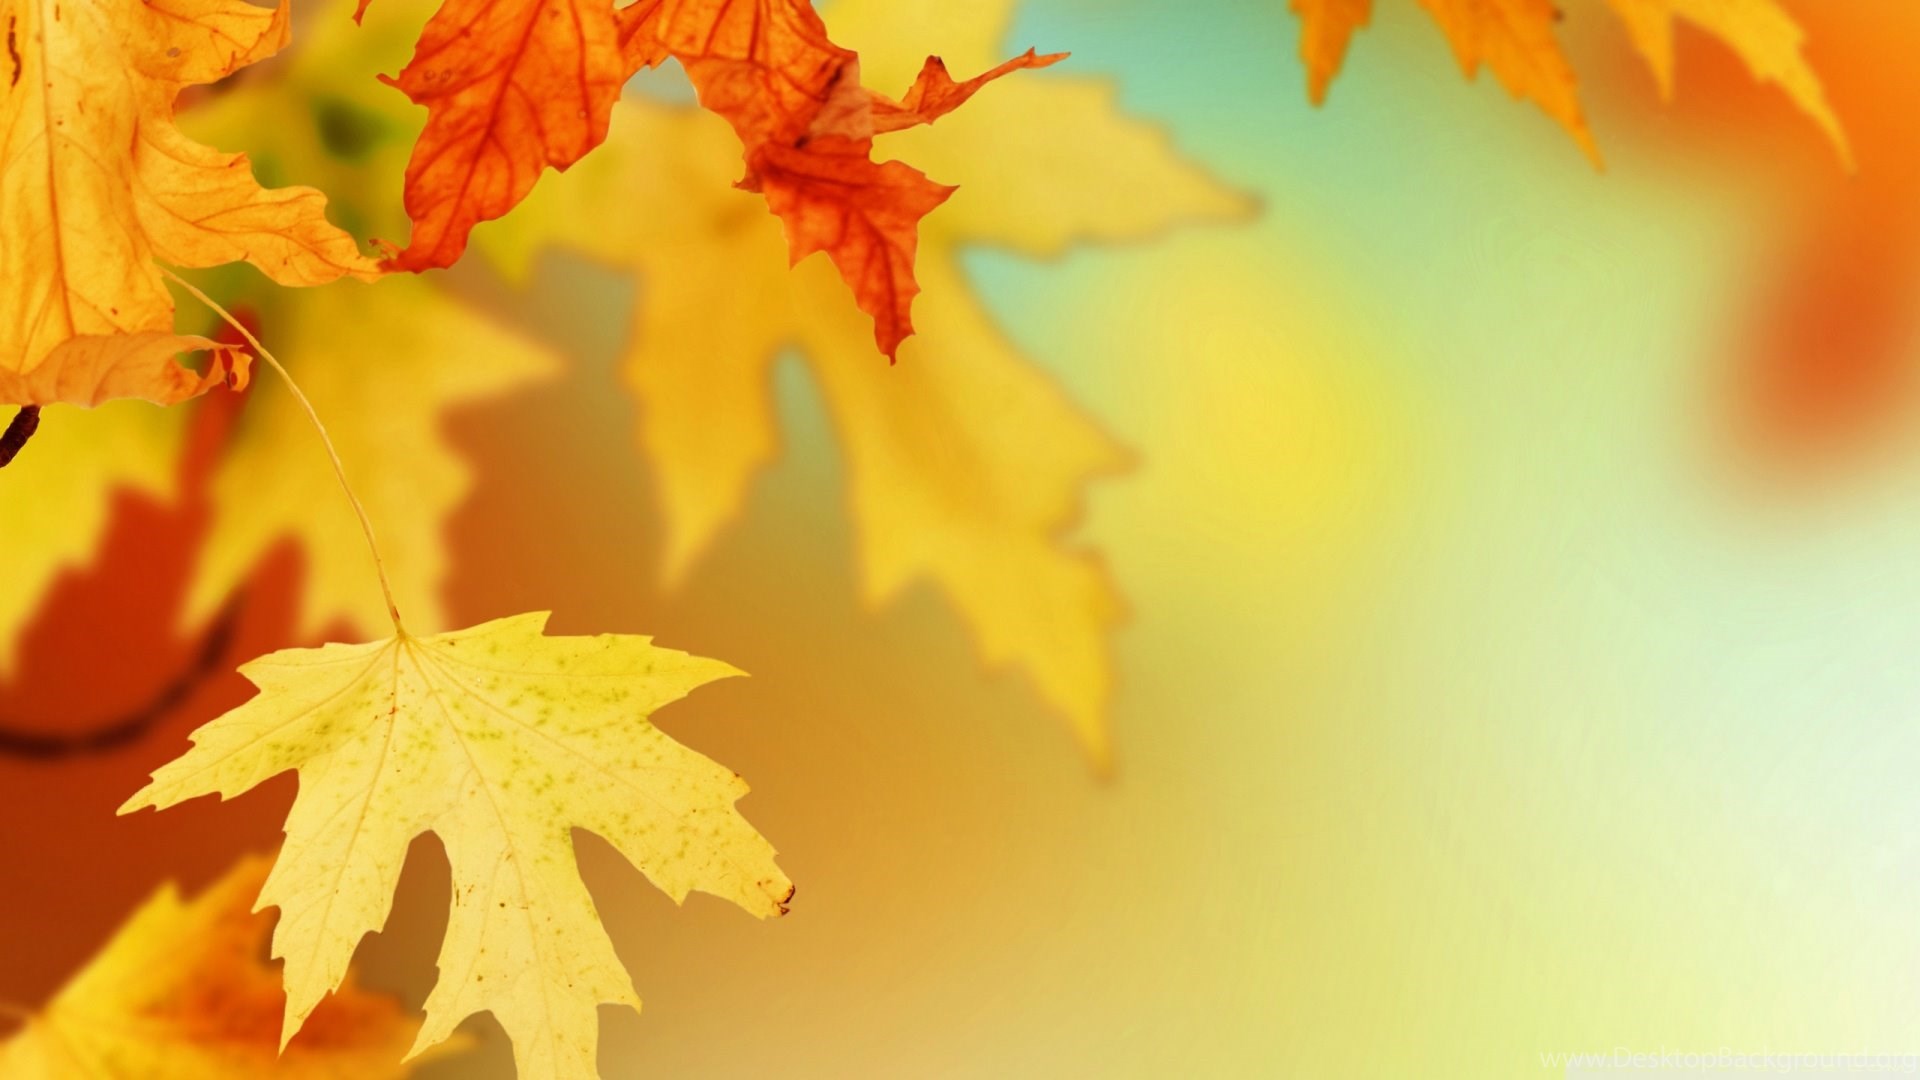 Download Yellow Autumn Leaves Macro Wallpaper 1920x1080. Desktop Background